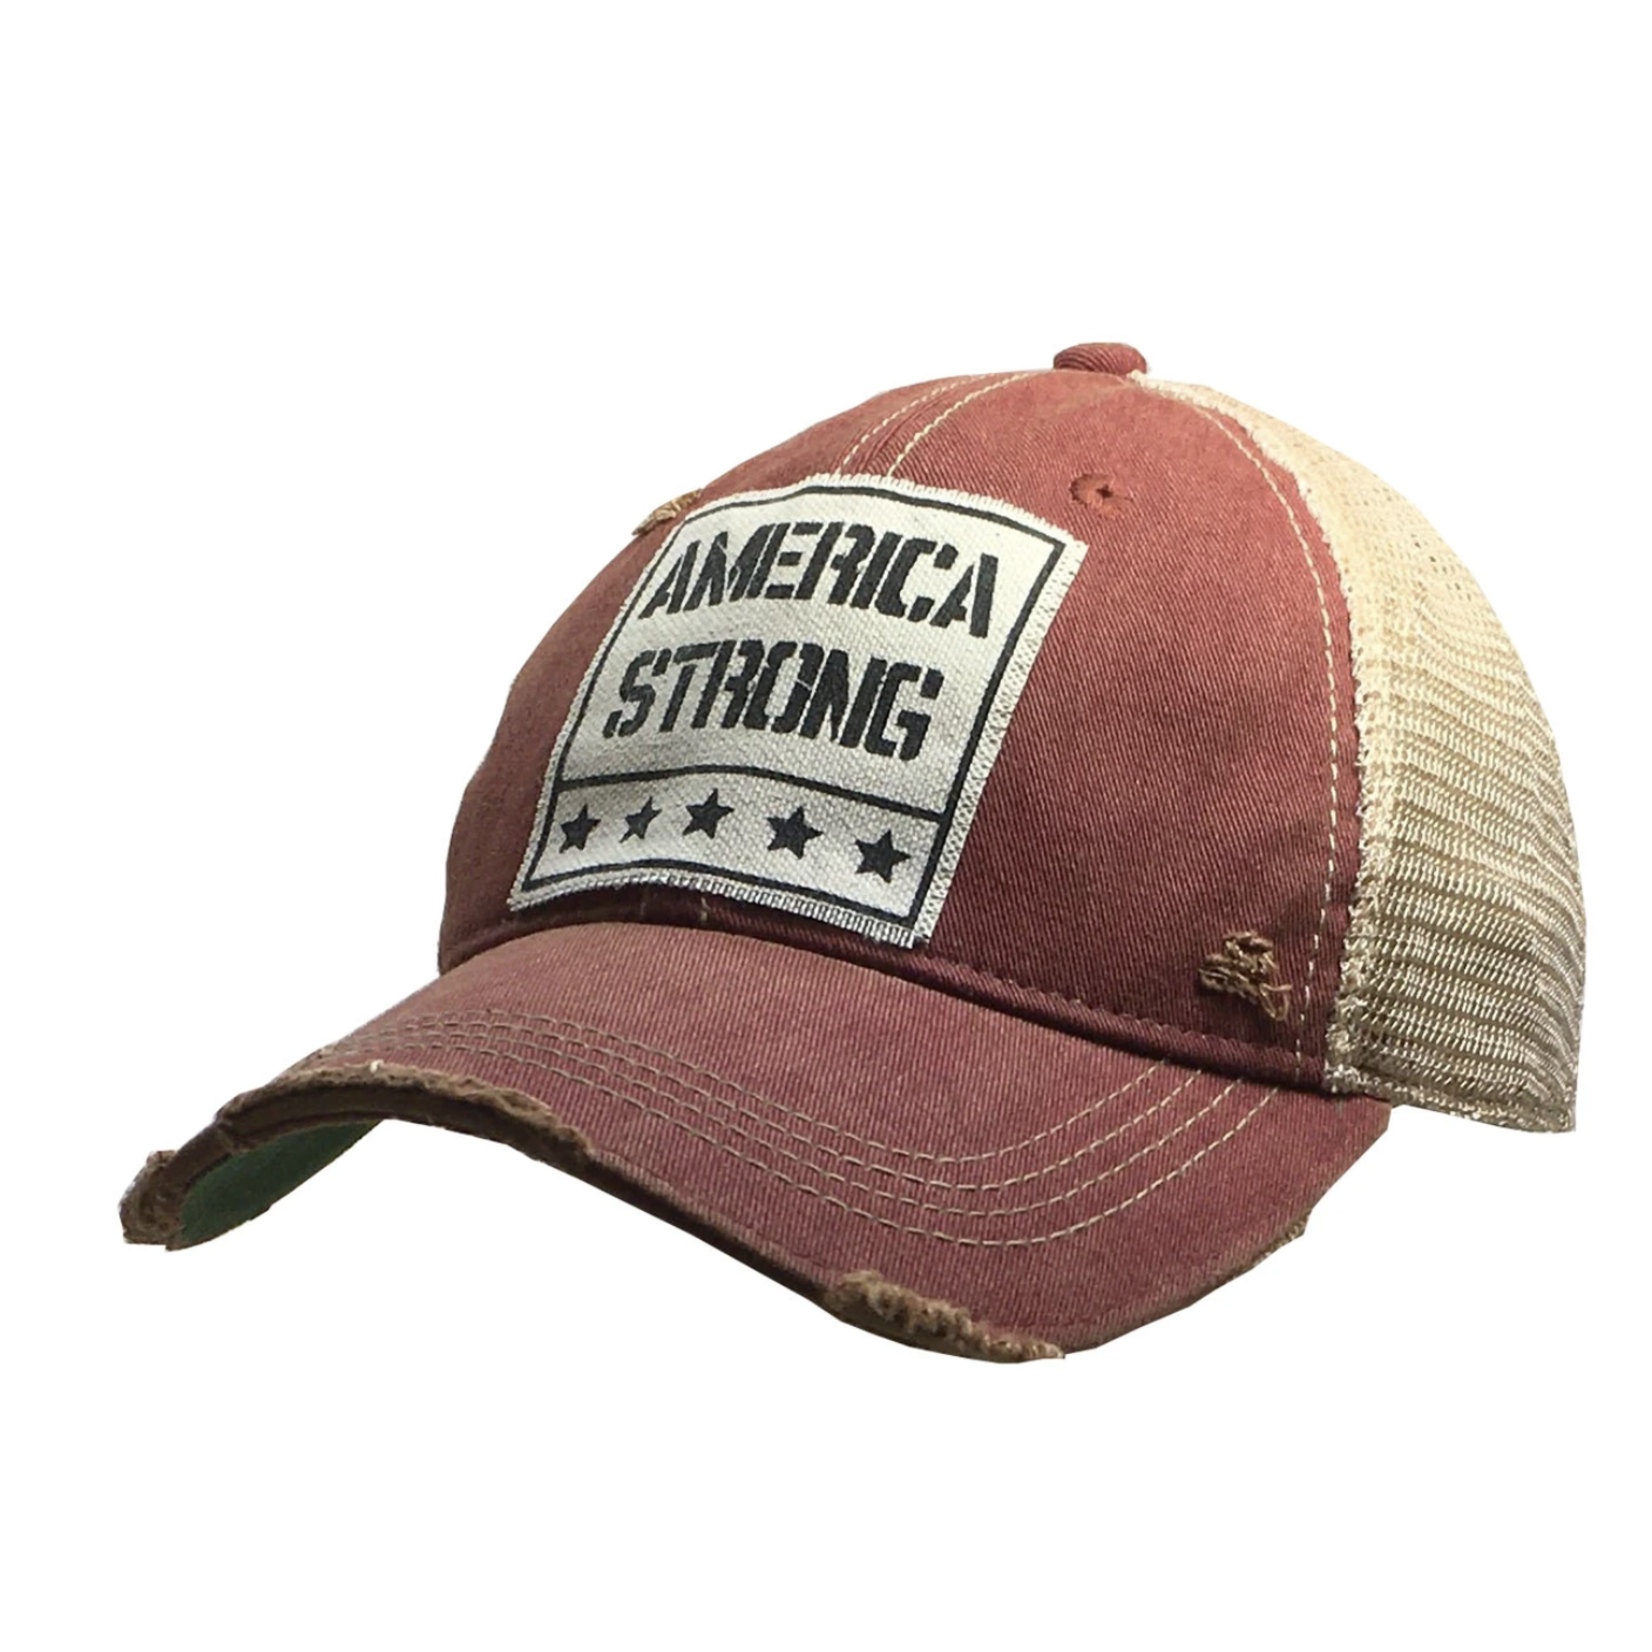 Vintage Life "American Strong" Vintage Distressed Trucker Cap